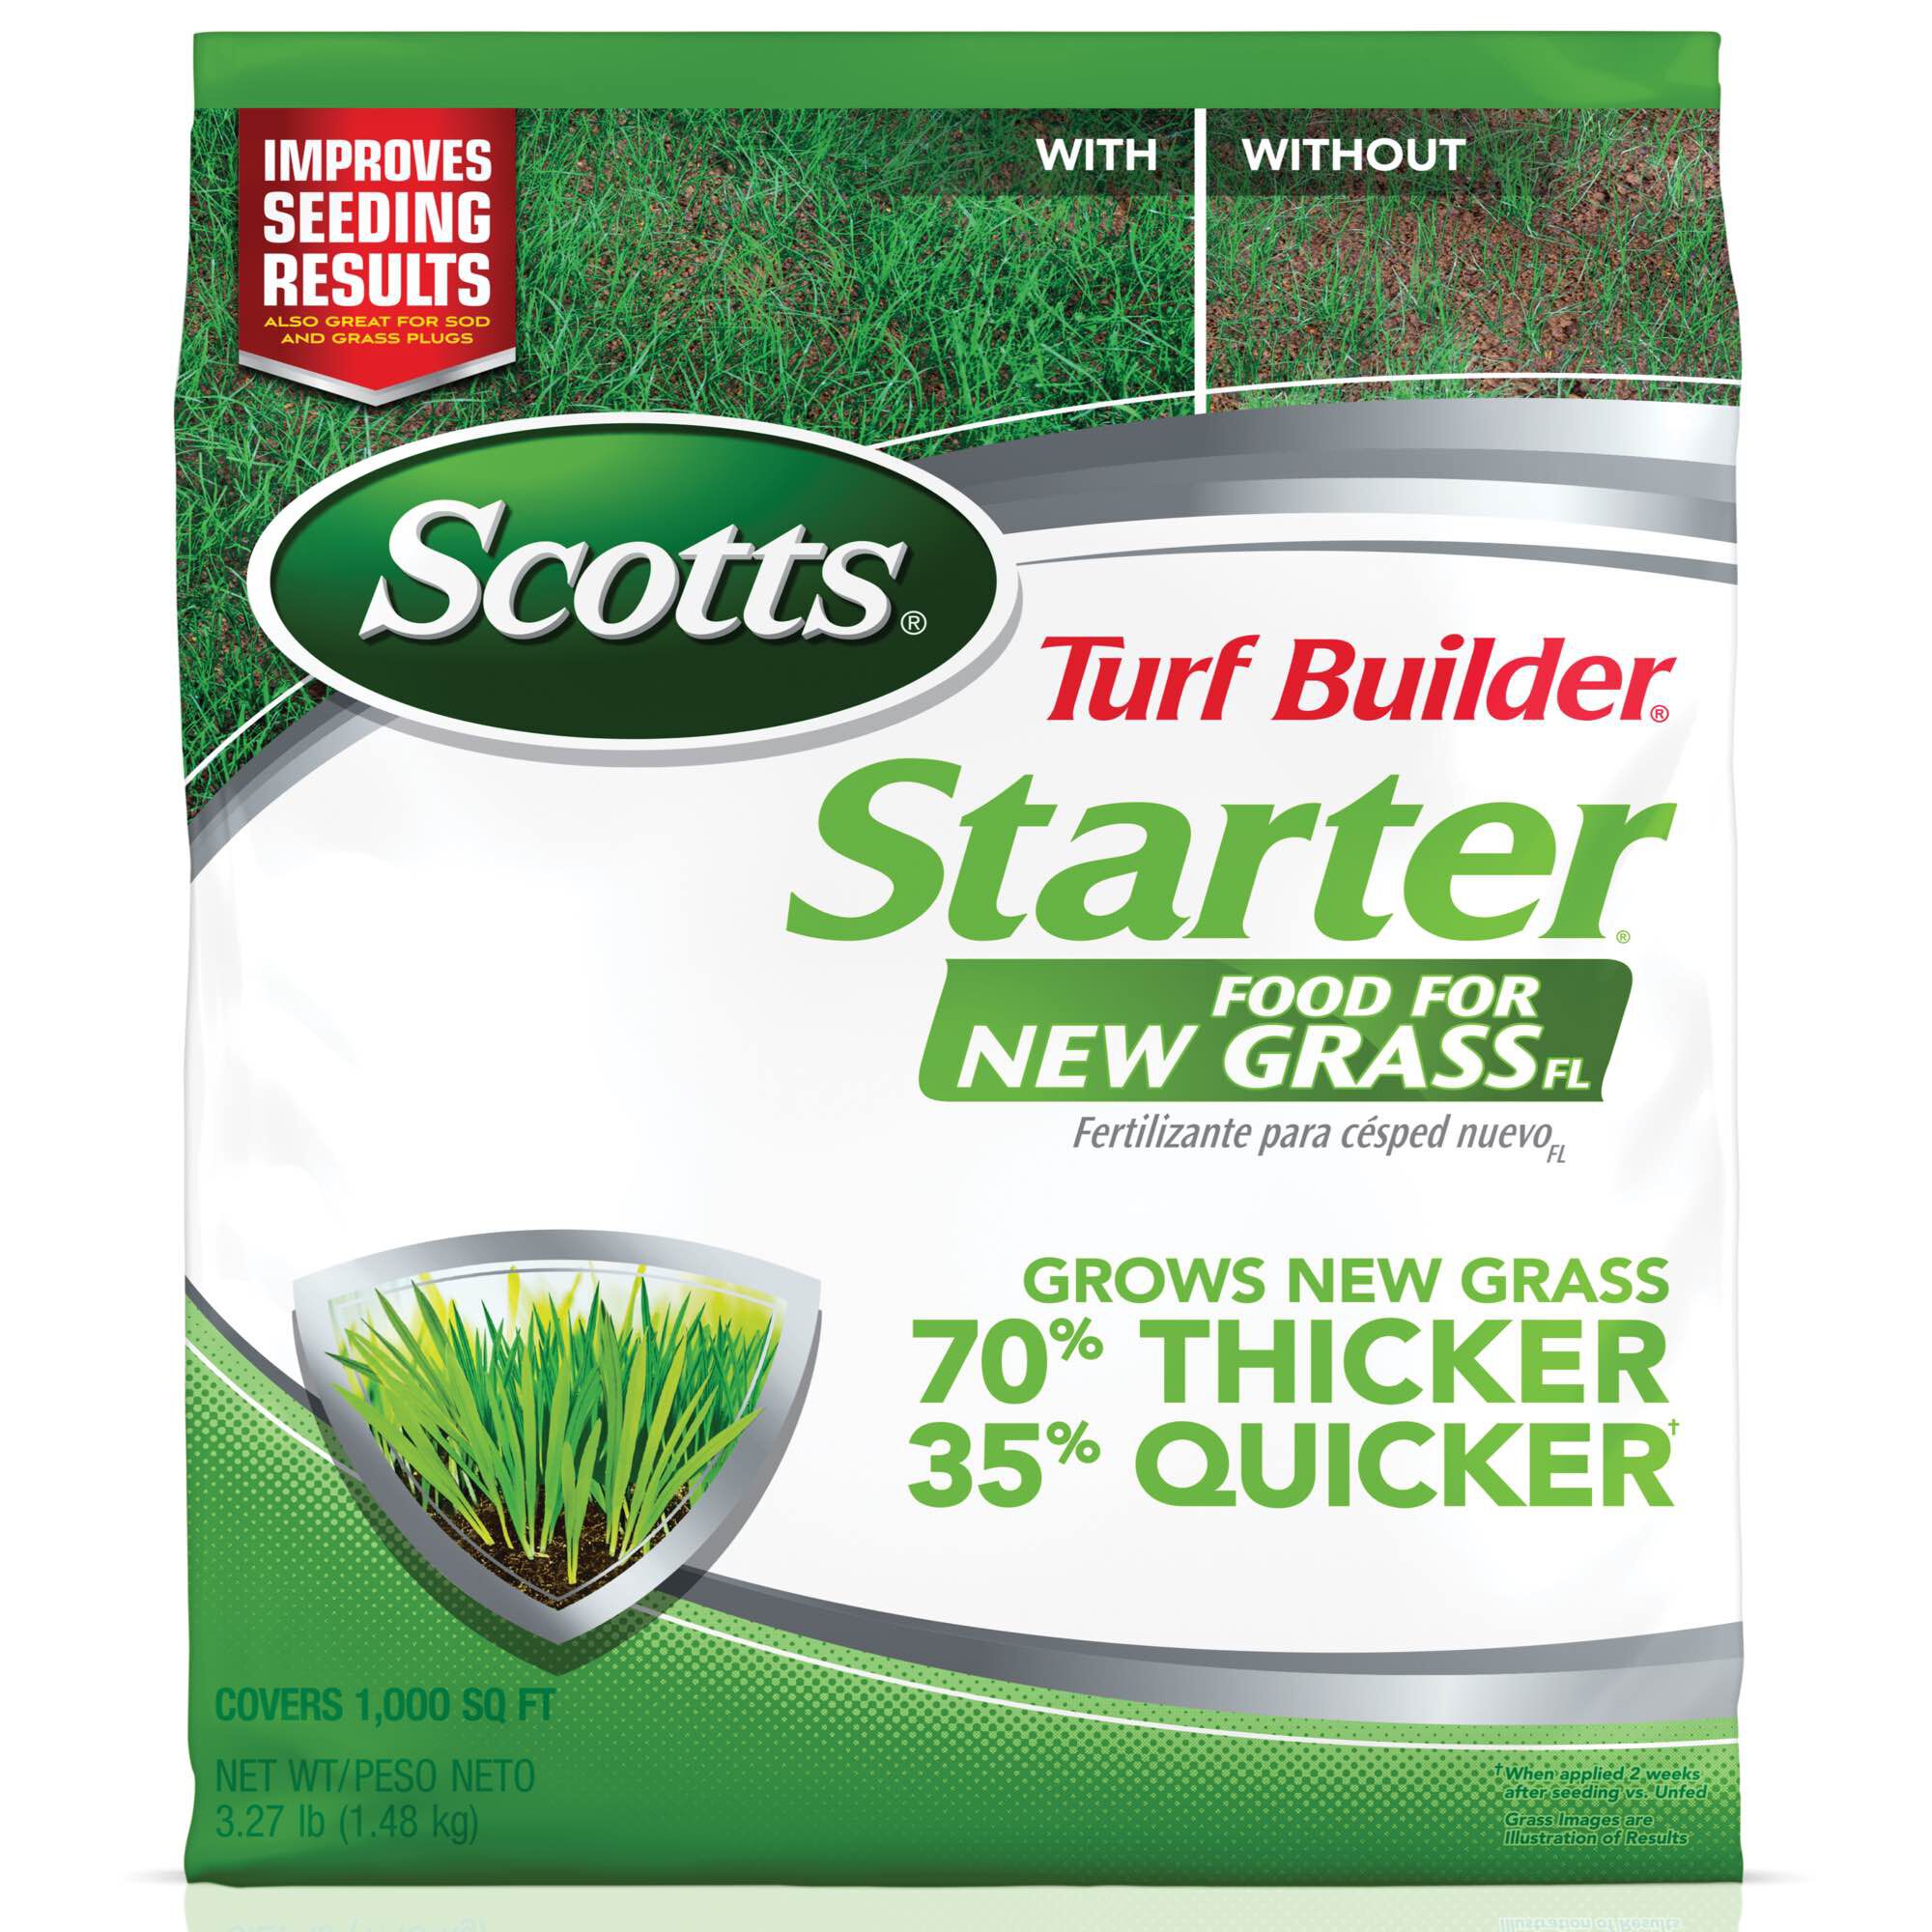 Image of Scotts Turf Builder Starter Food for New Grass fertilizer on Pinterest